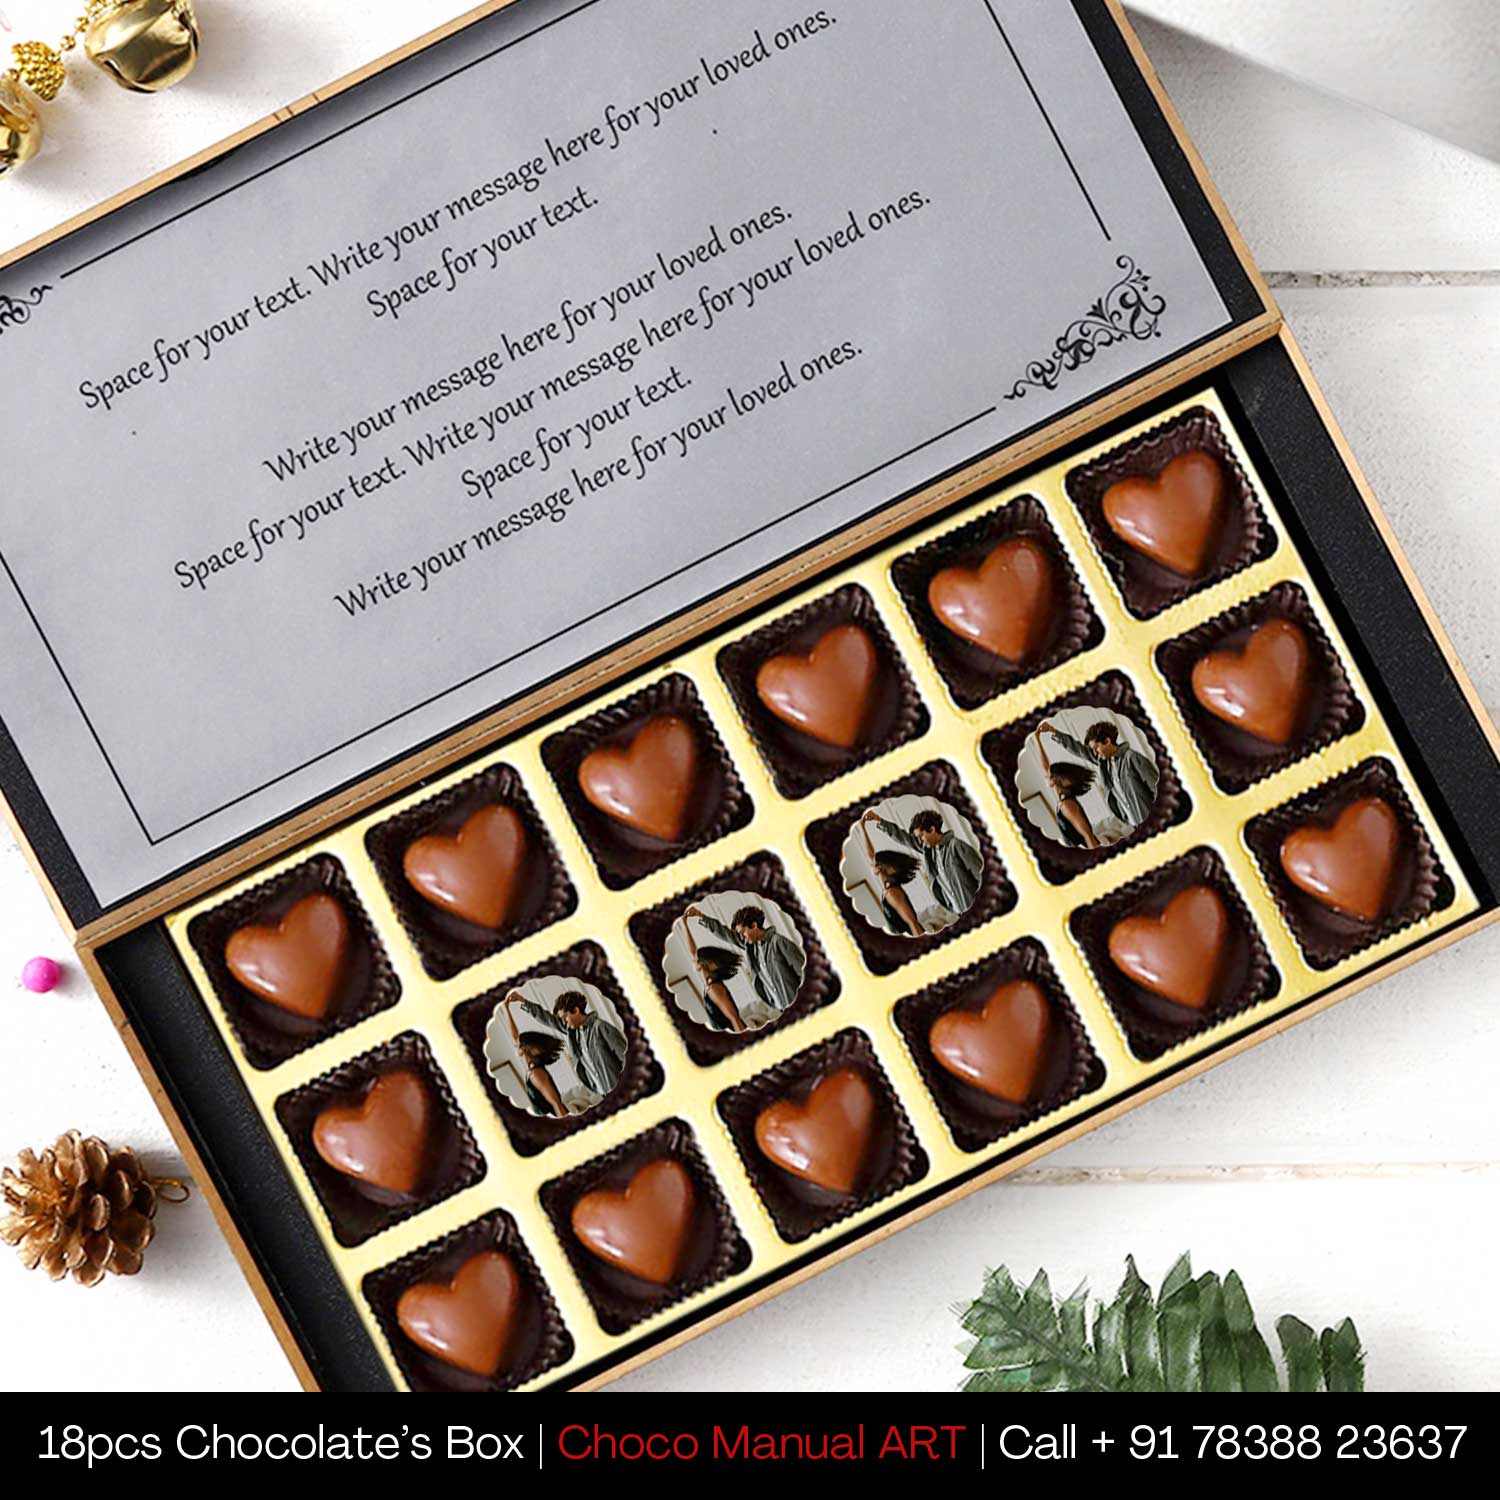 Hug Day Personalised Chocolate gift I Buy at Choco ManualART